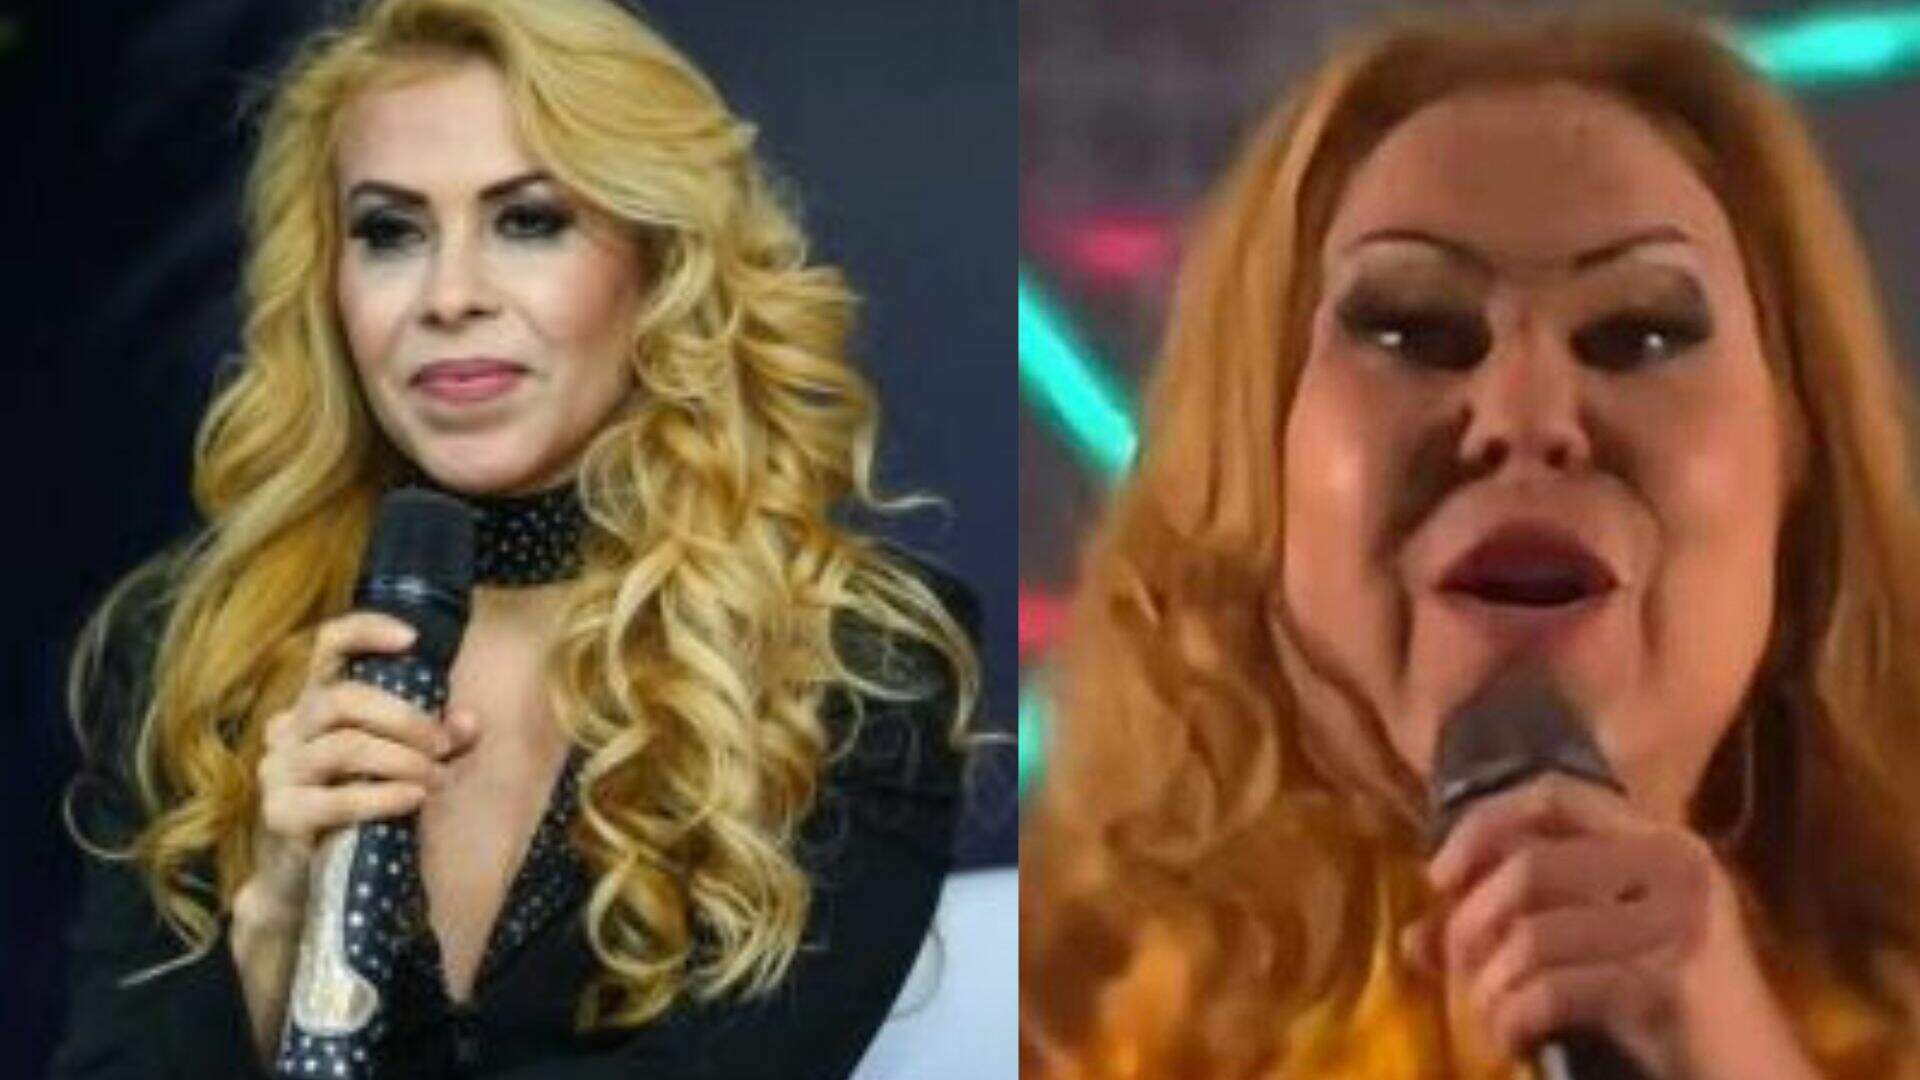 O que Joelma tem? Após exames, cantora descobre real problema de saúde que deixou seu rosto inchado - Metropolitana FM